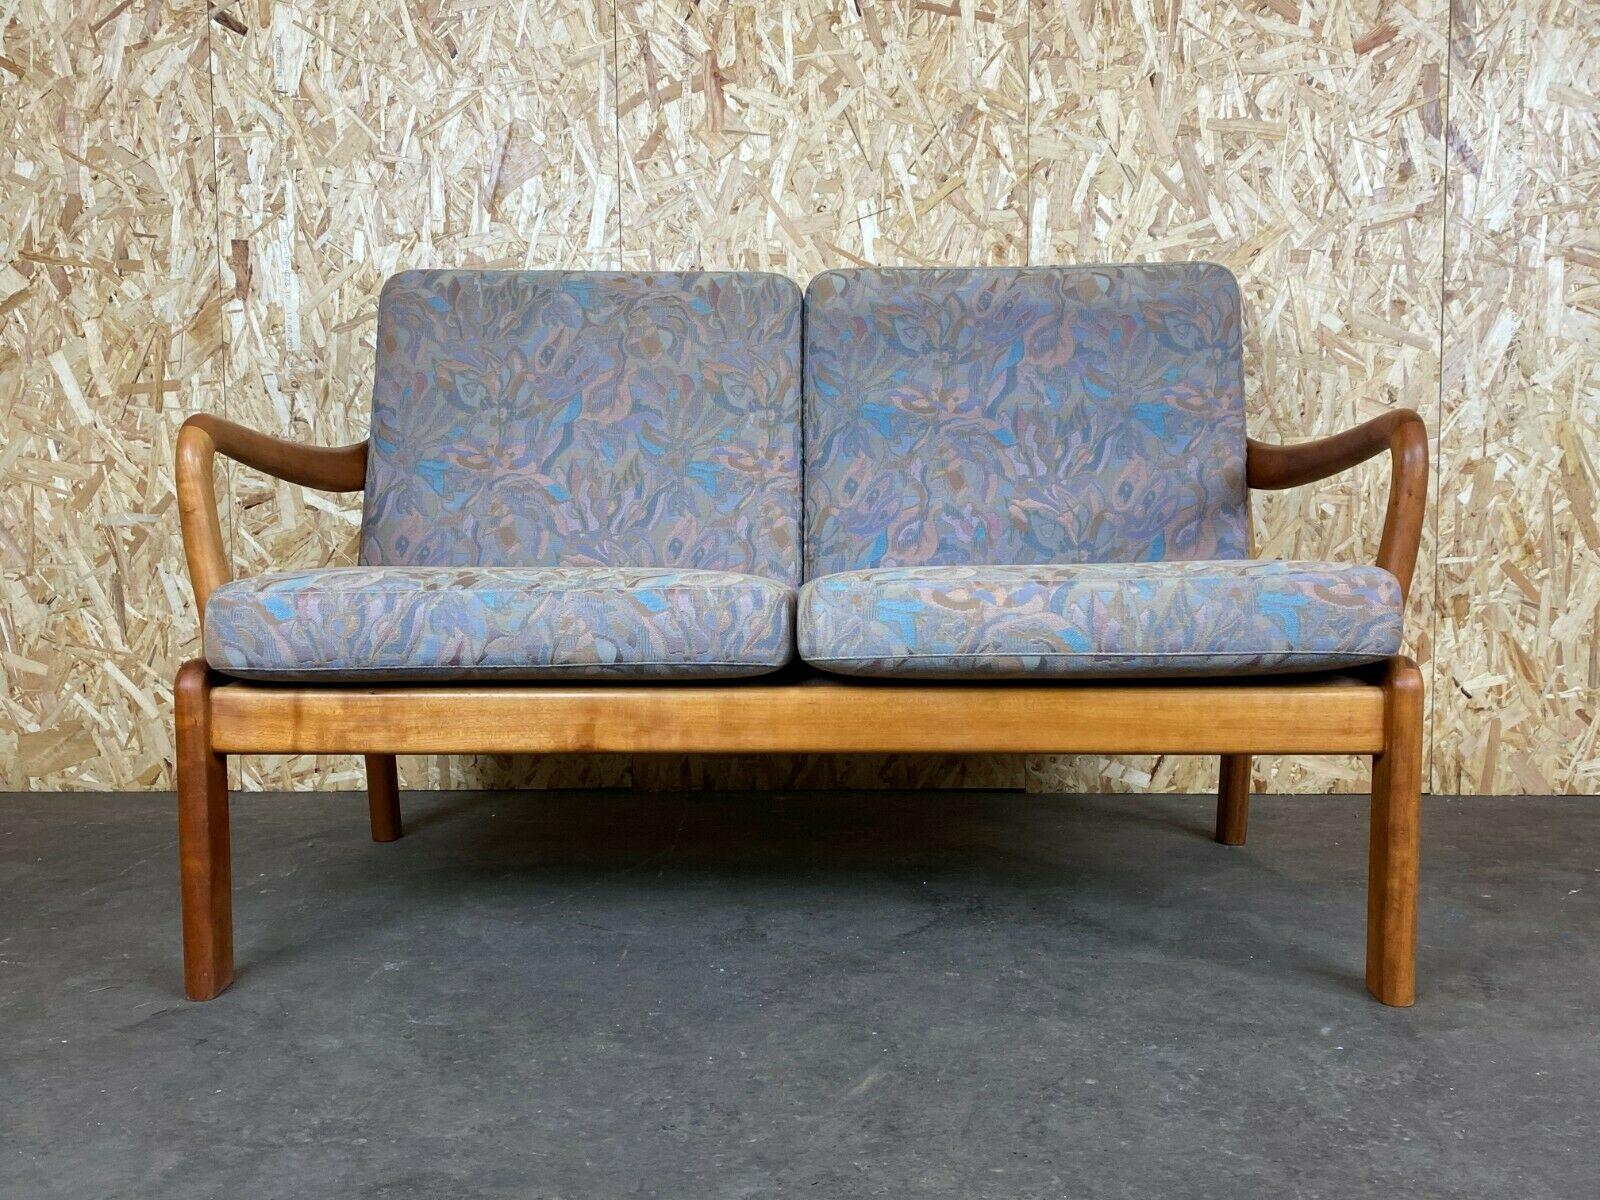 60s 70s teak sofa Couch L. Olsen & Søn Danish Modern Denmark Design 60s

Object: 2-seater sofa

Manufacturer: L. Olsen & Son

Condition: good

Age: around 1960-1970

Dimensions:

131cm x 80cm x 79cm
Seat height = 42cm

Other